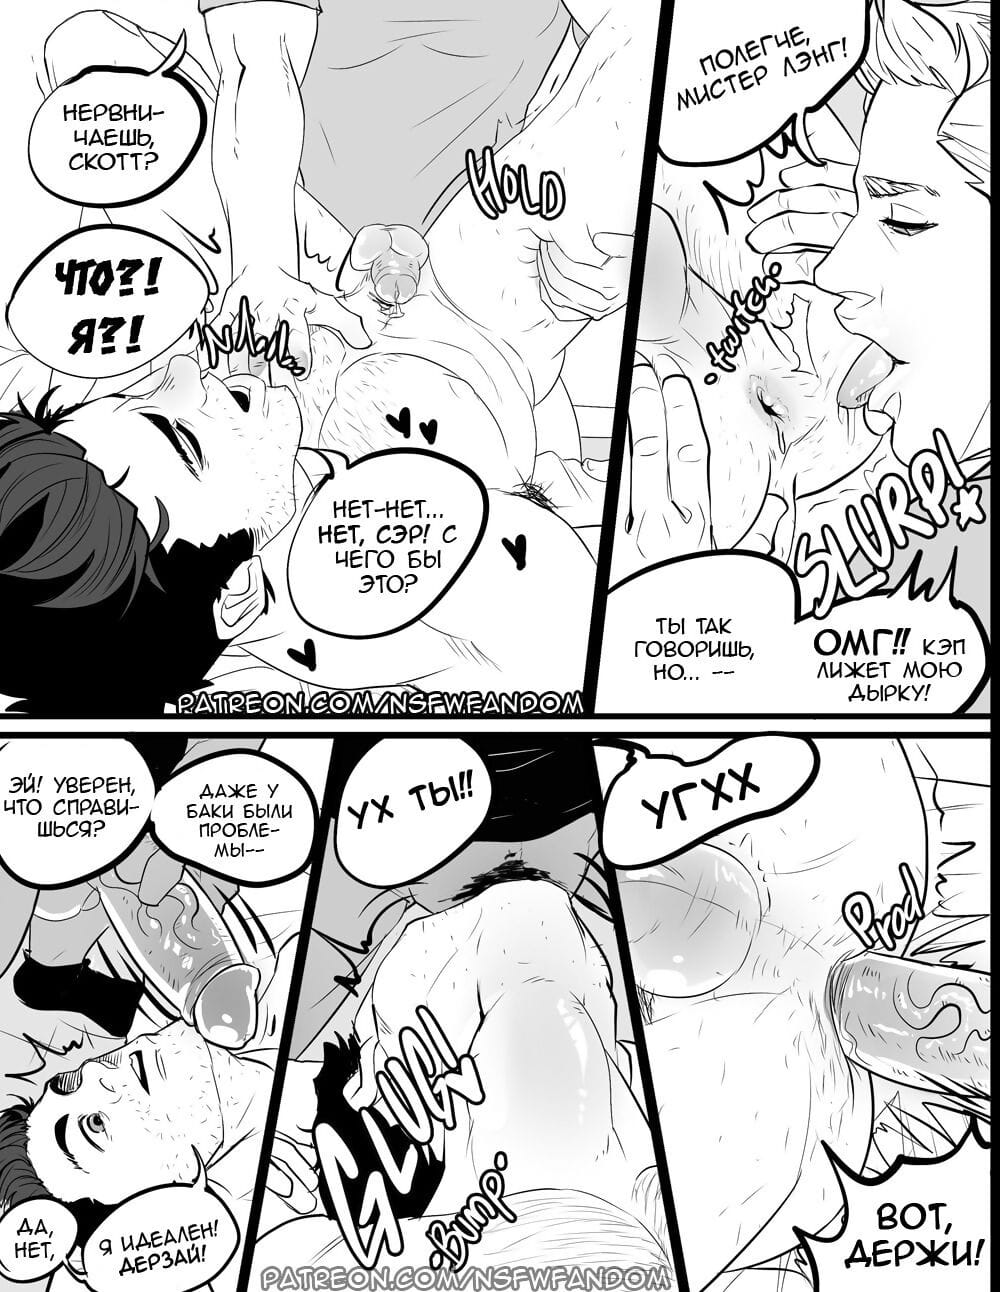 antman キャップ - ファルコン Threesome page 1